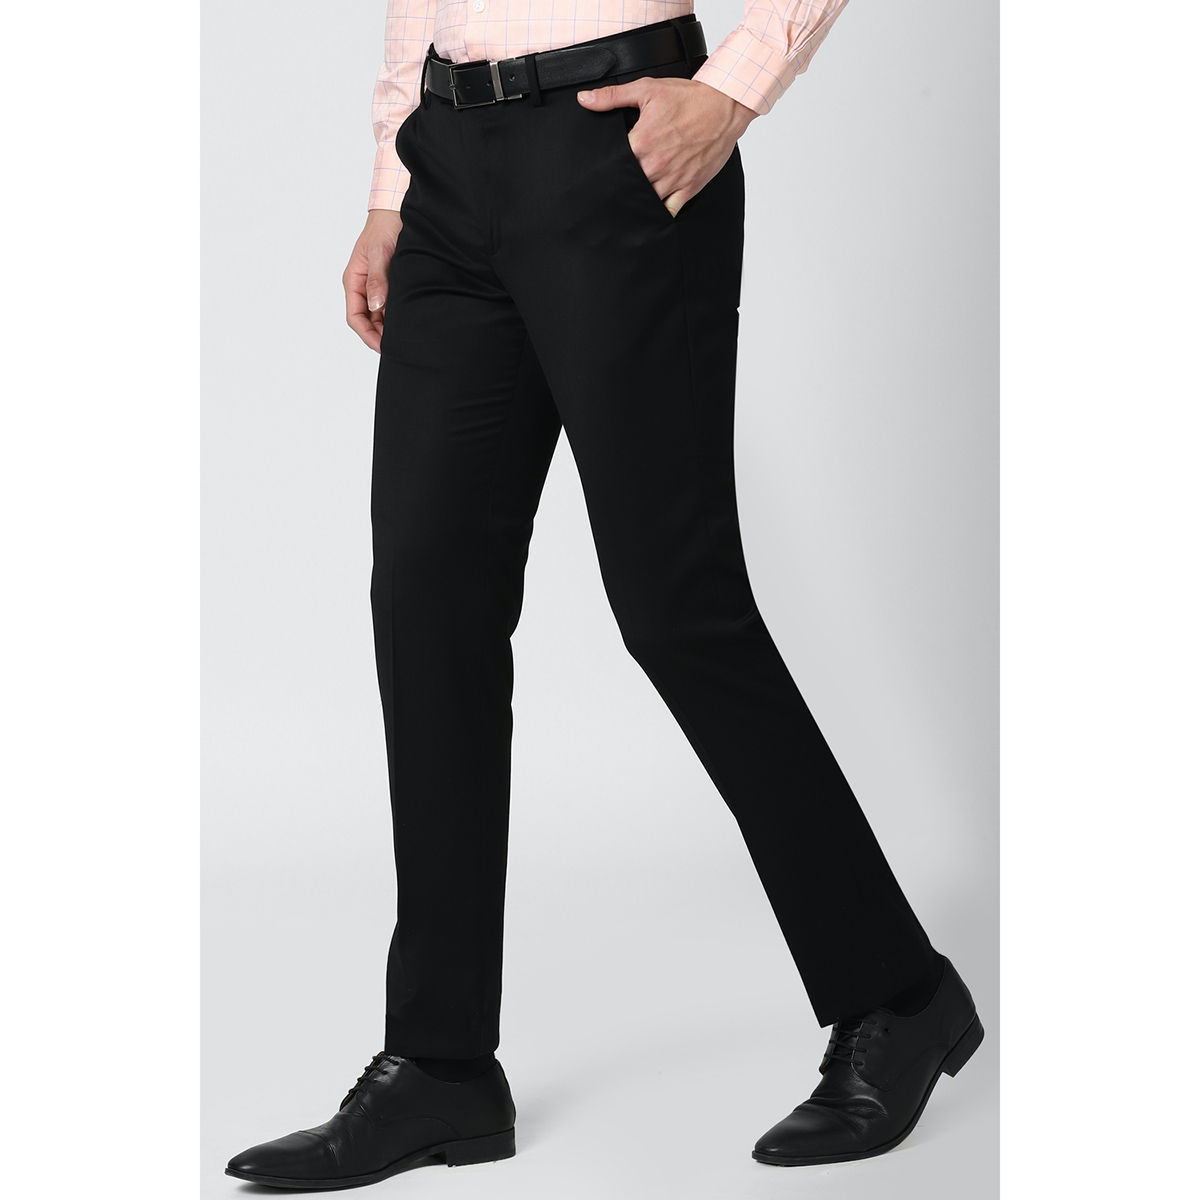 Buy Peter England Men's Western Pants (PITFONSFT46615_Black_36) at Amazon.in